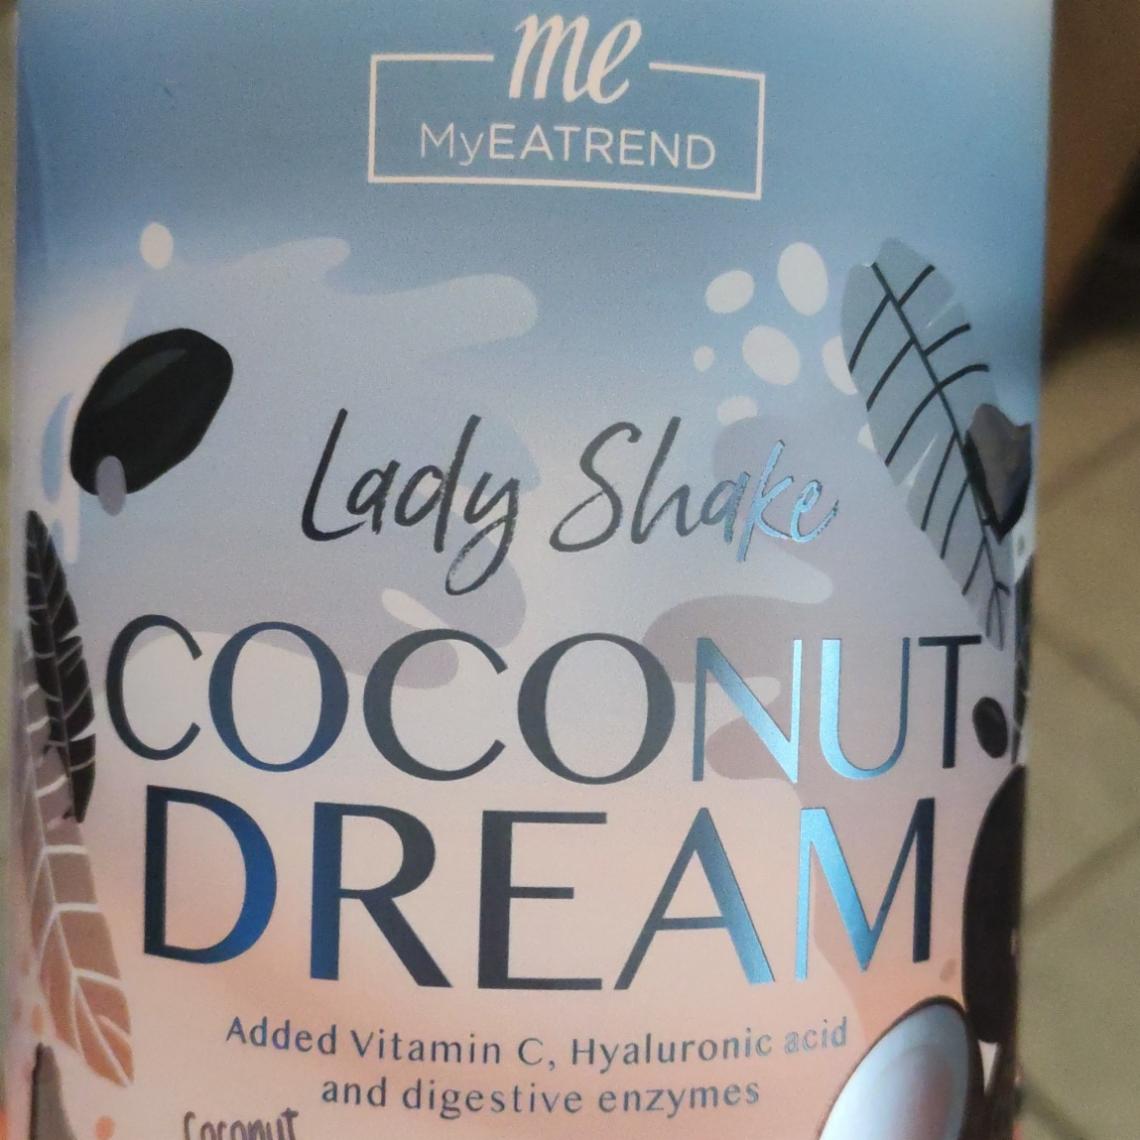 Képek - Lady Shake Coconut Dream fehérjepor Me MyEatrend